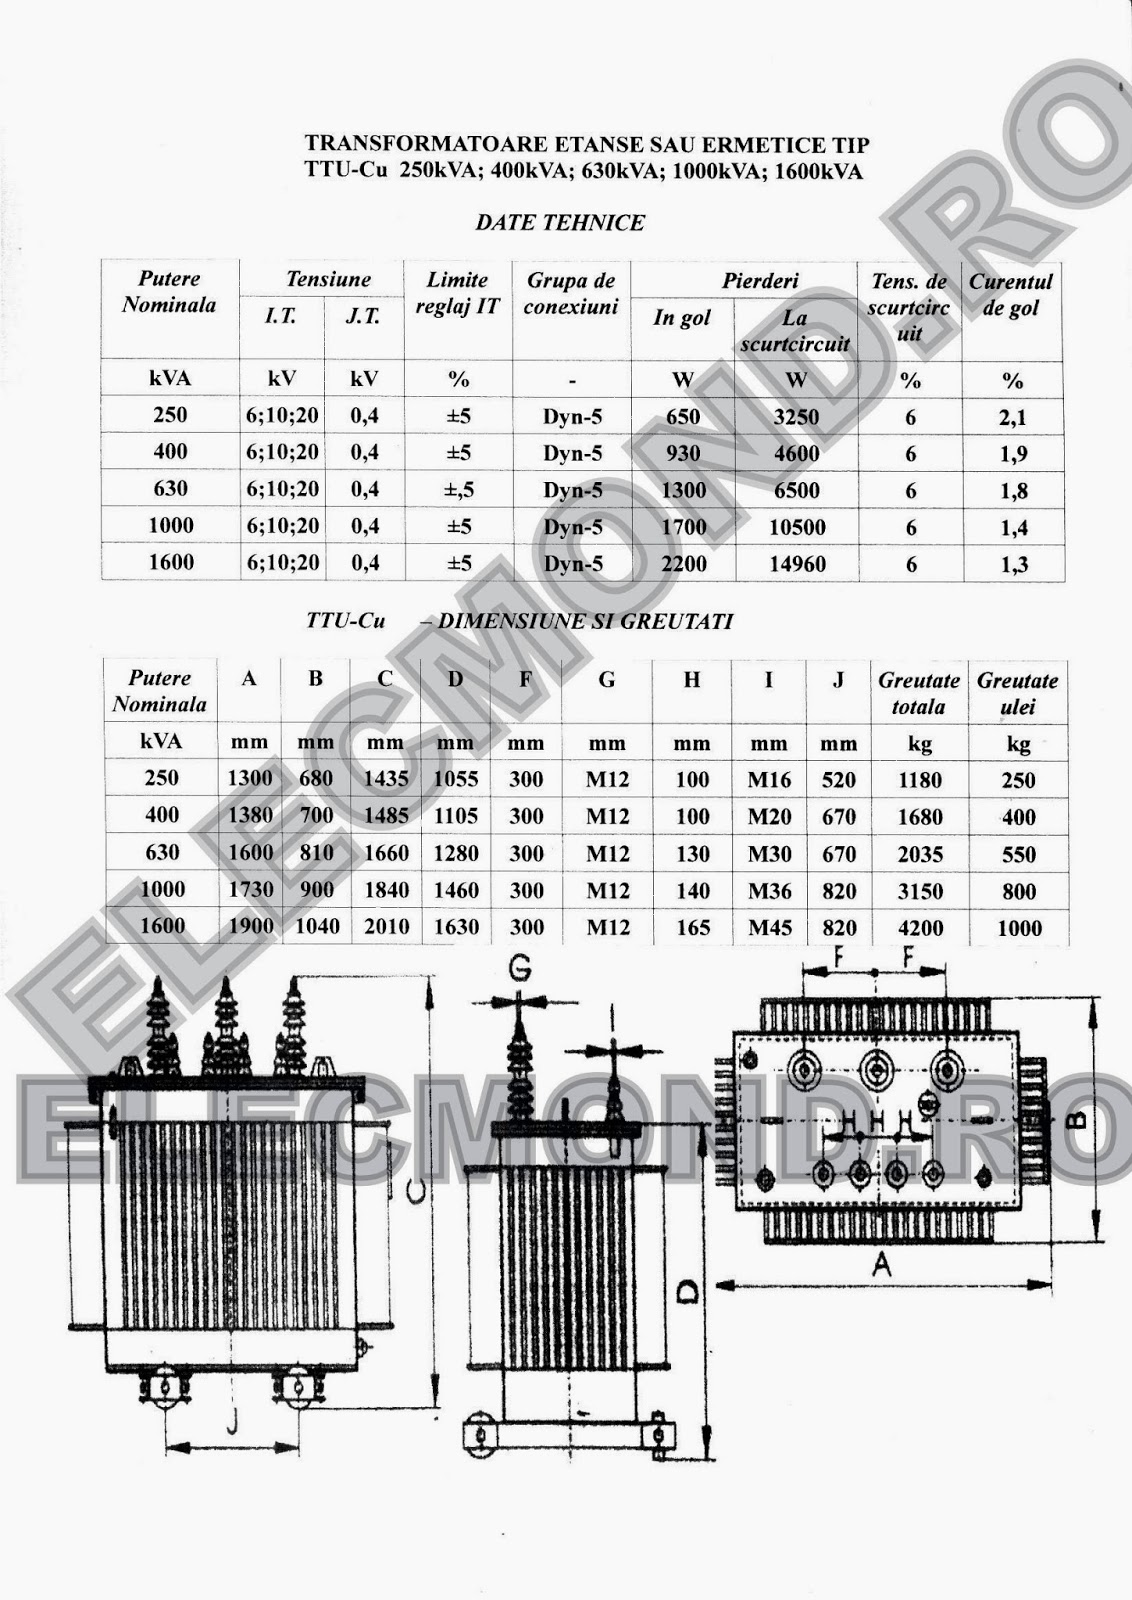 DATE TEHNICE TRANSFORMATOARE ERMETICE ETANSE  CUPRU 250 kVA 400 kVA 630 kVA 1000 kVA 1600 kVA